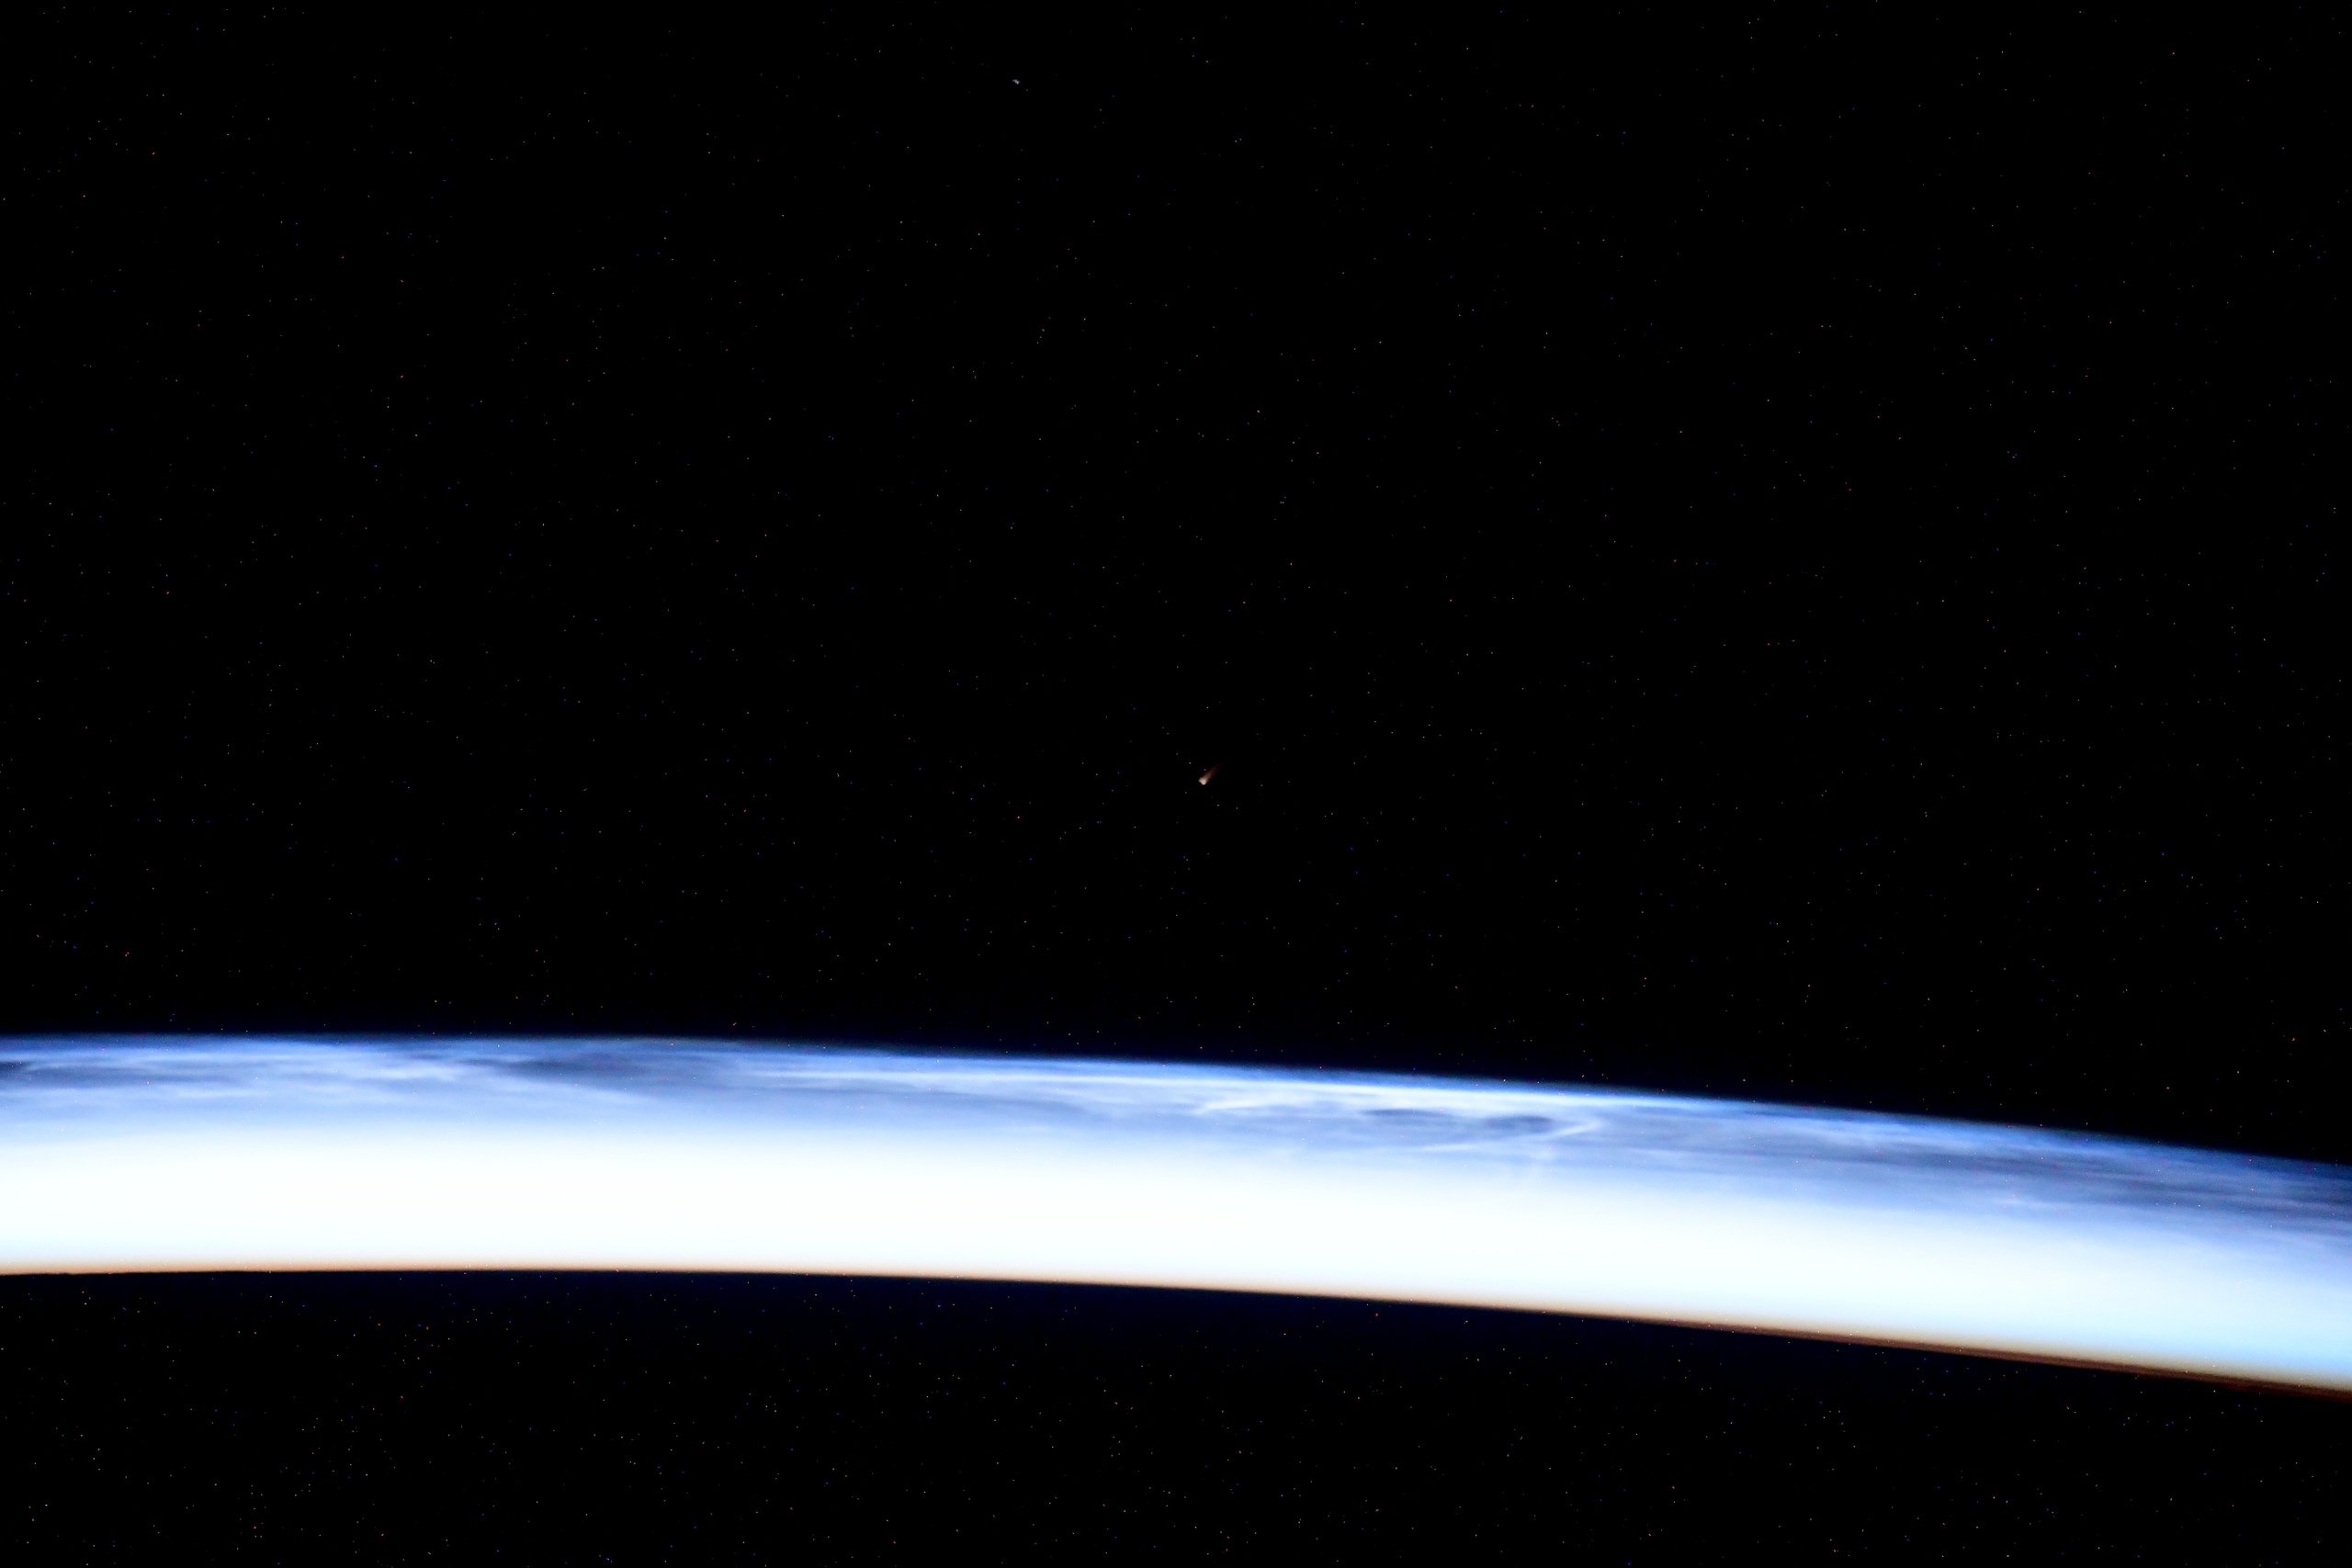 Над Землей пролетит комета. Фото: Иван Вагнер в Твиттер